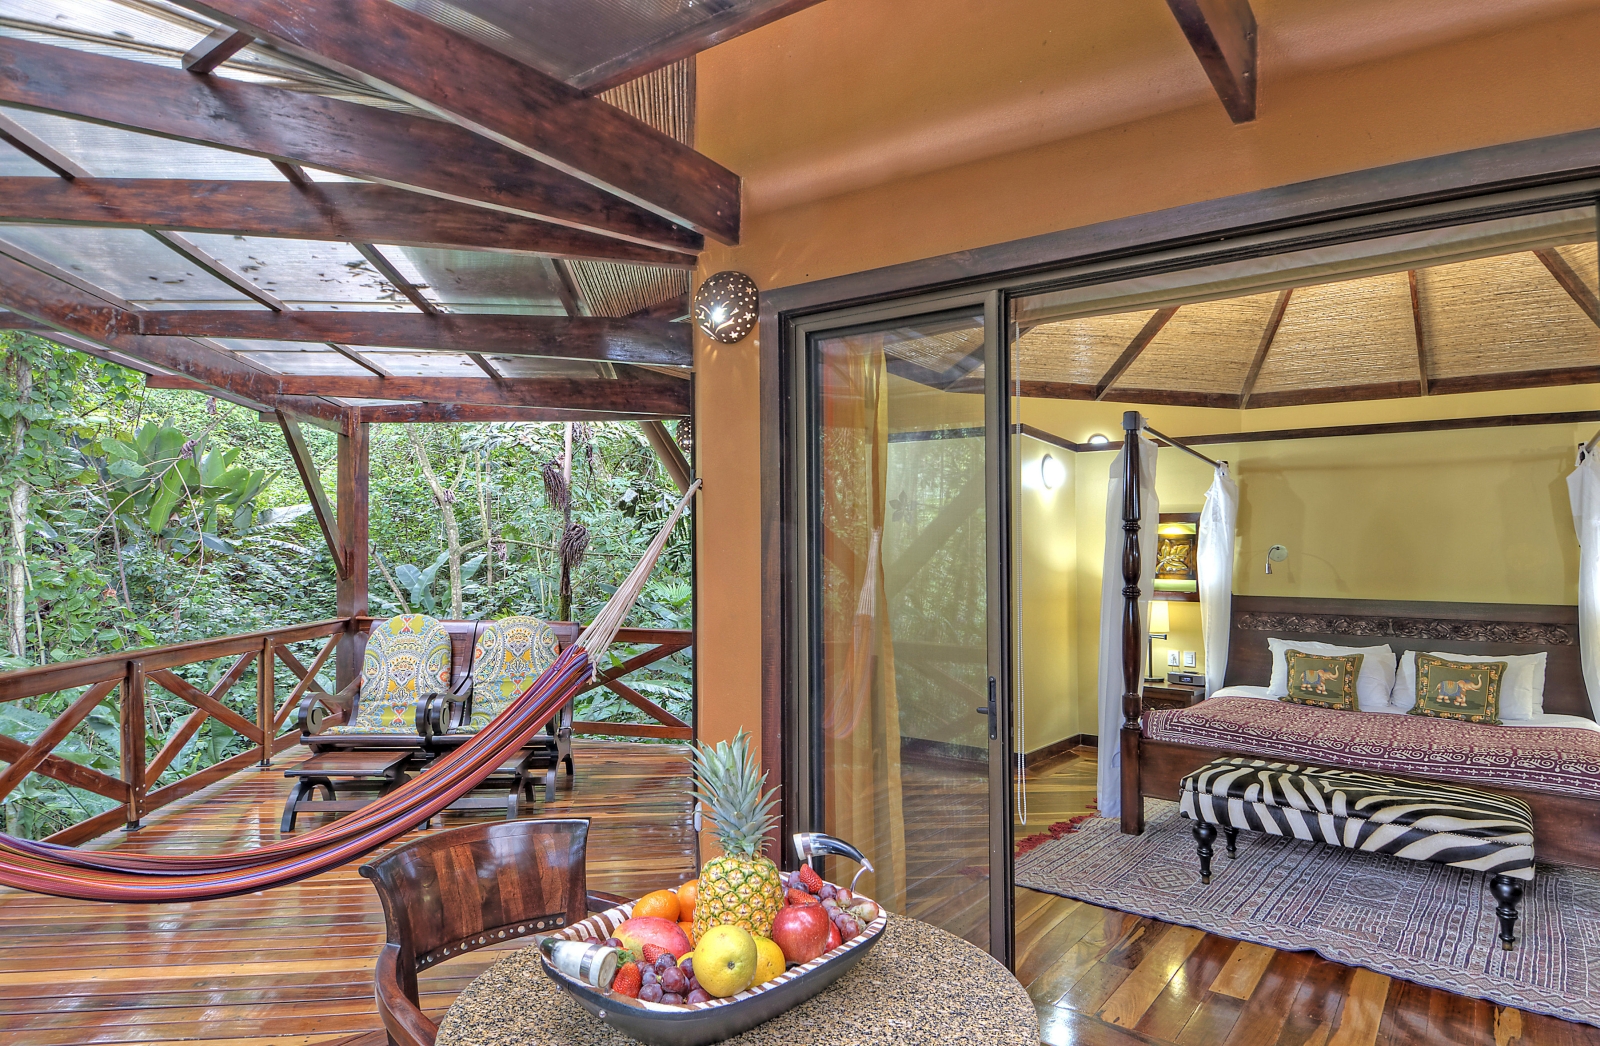 Bedroom at Arenal Nayara and Gardens Resort in Costa Rica